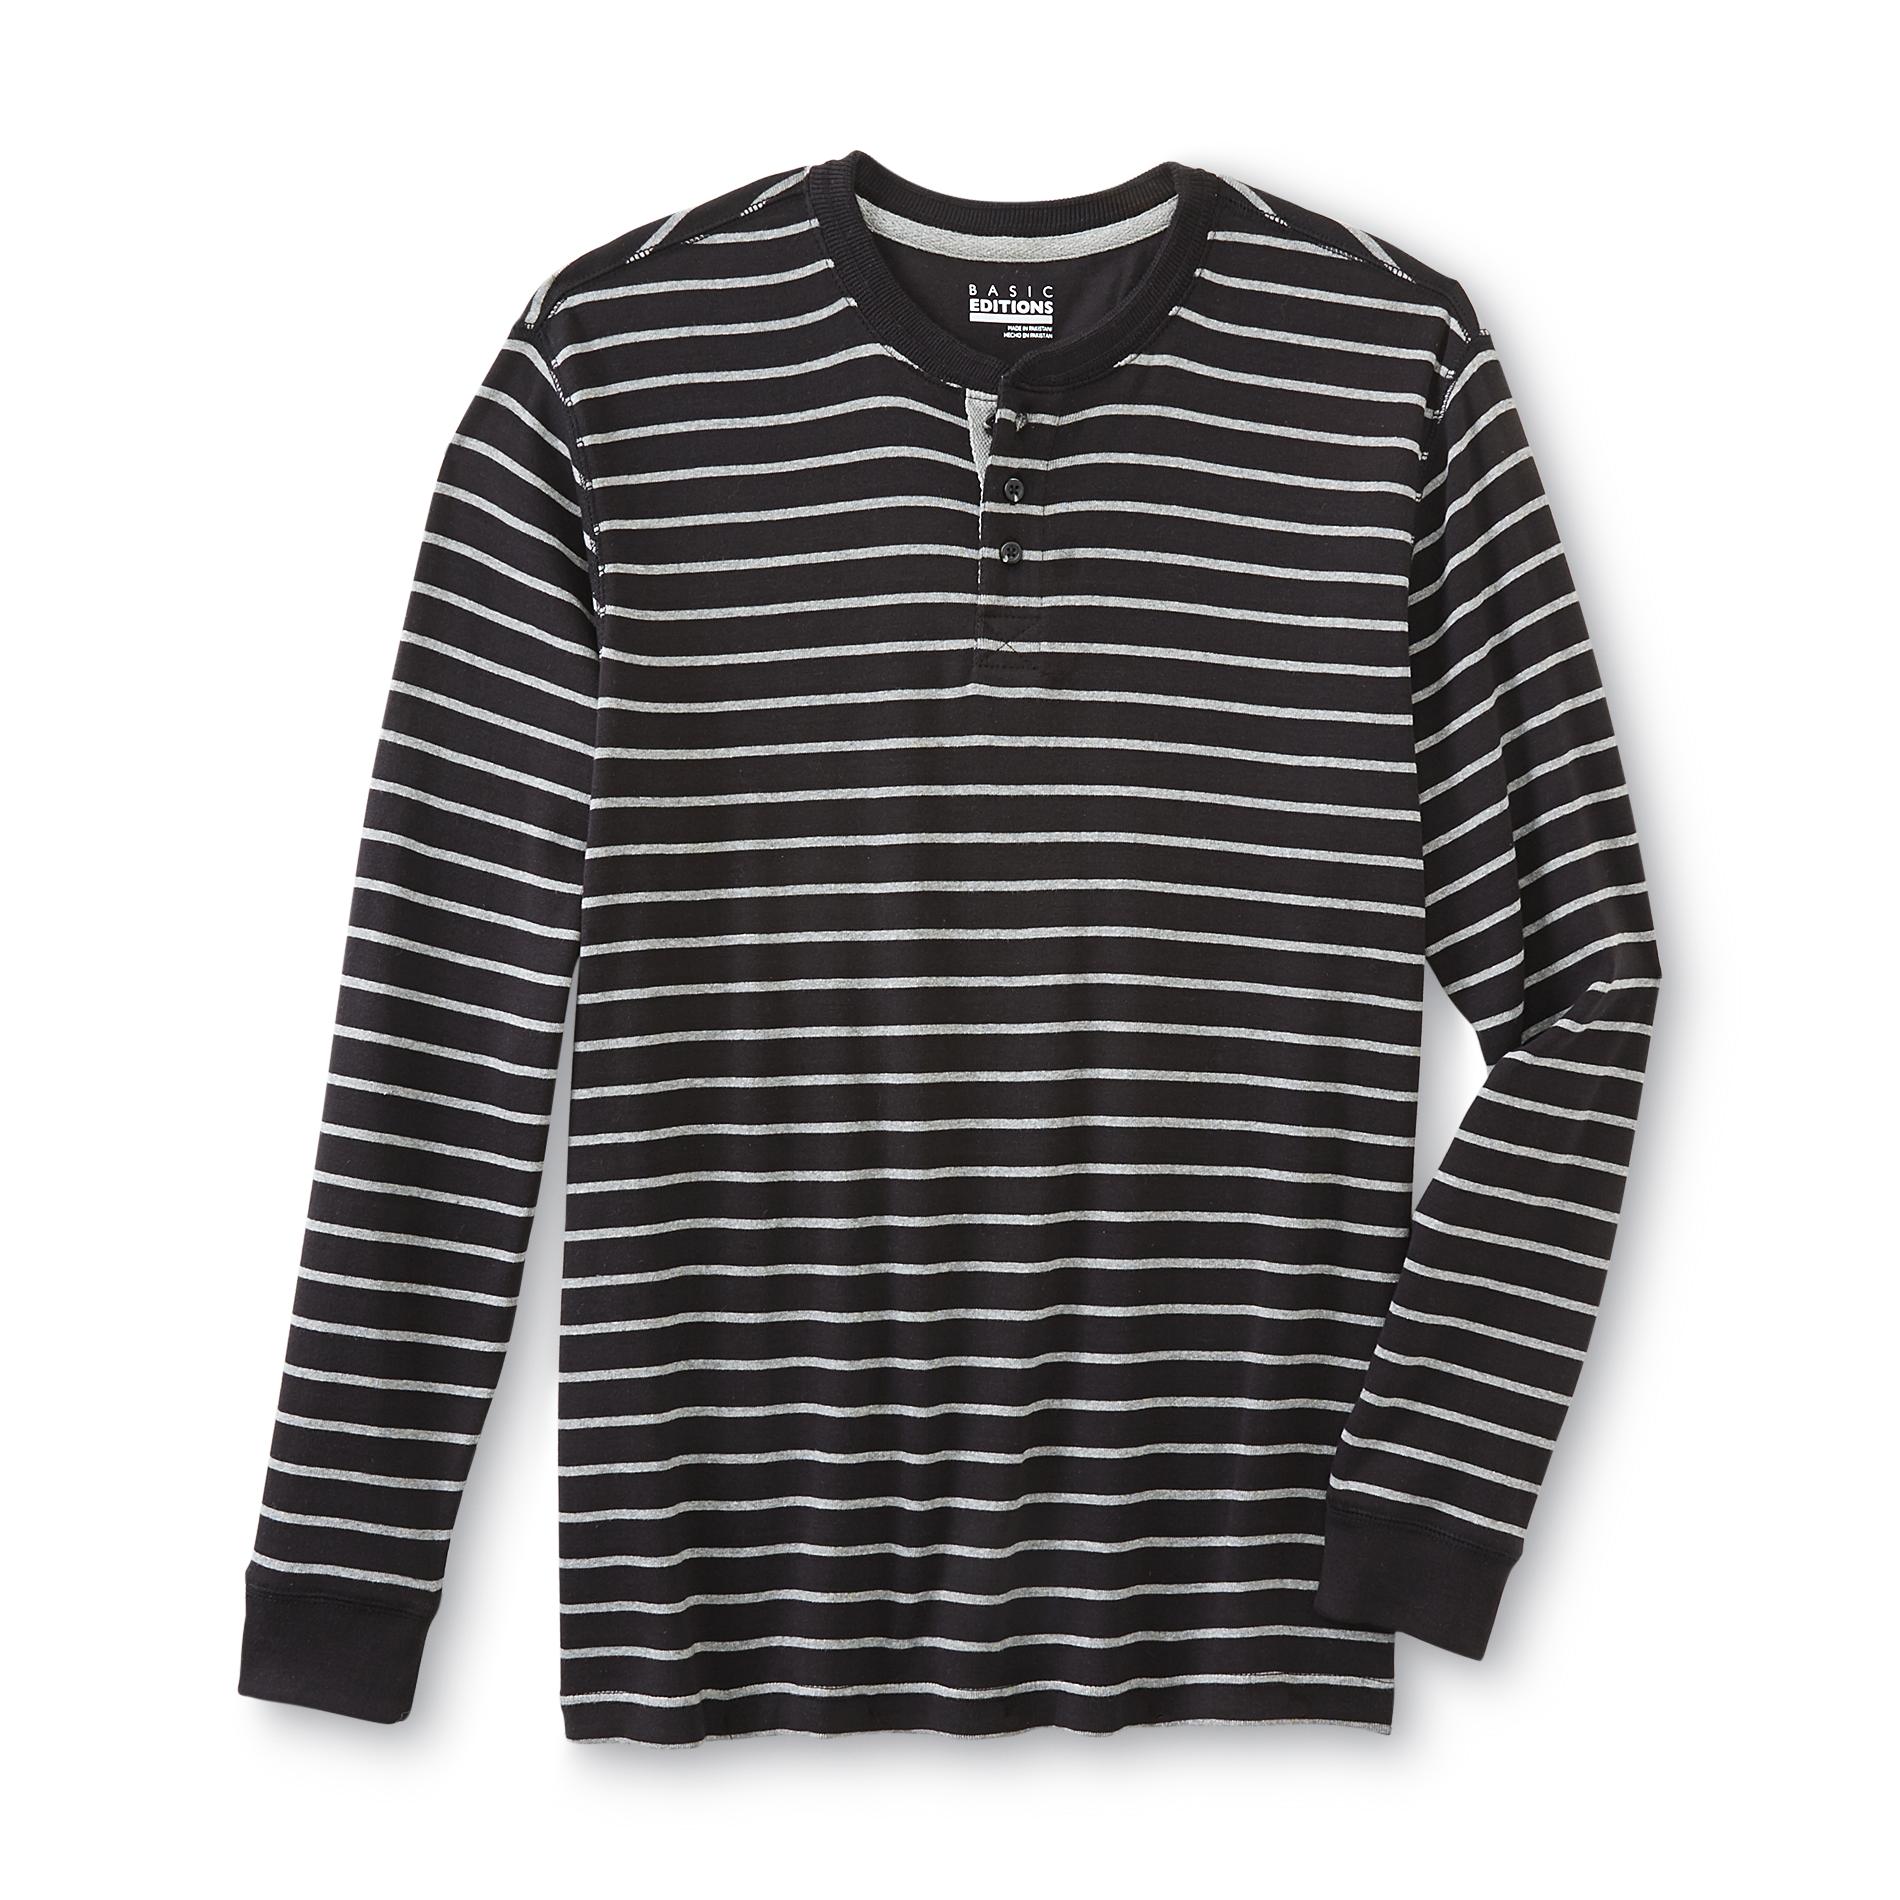 Basic Editions Men's Henley Shirt - Striped